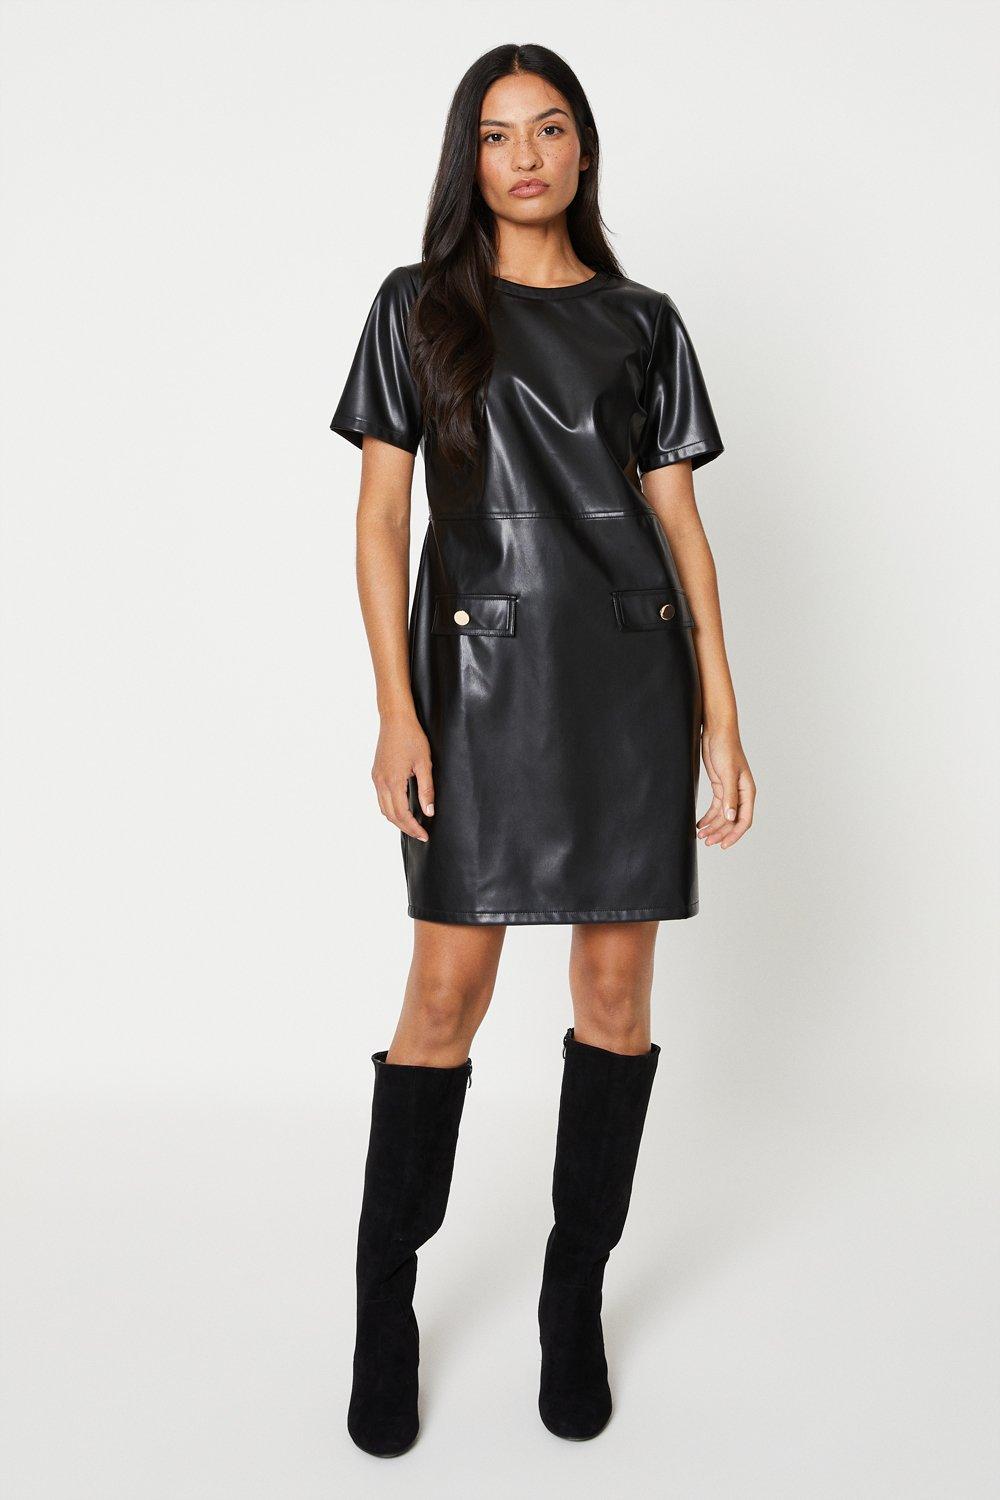 Women’s Short Sleeve Pocket Front Pu Dress - black - 16